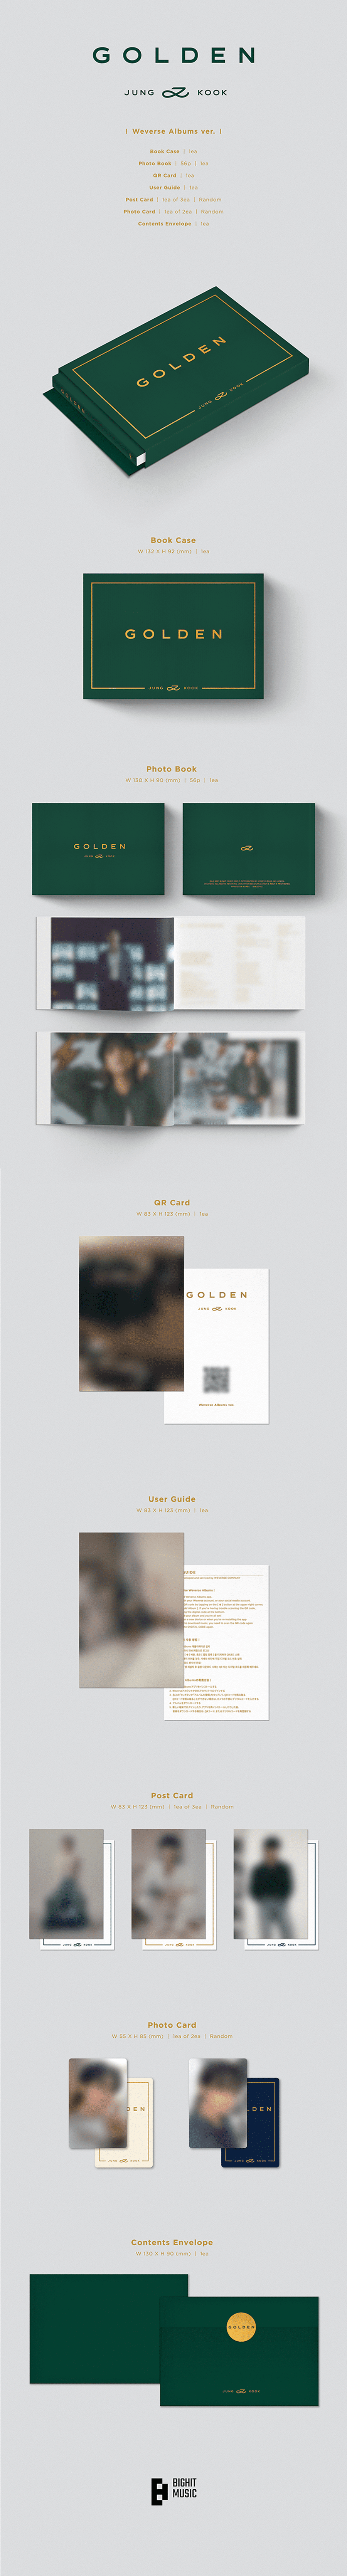 jungkook-bts-golden-weverse-albums-ver-wholesales